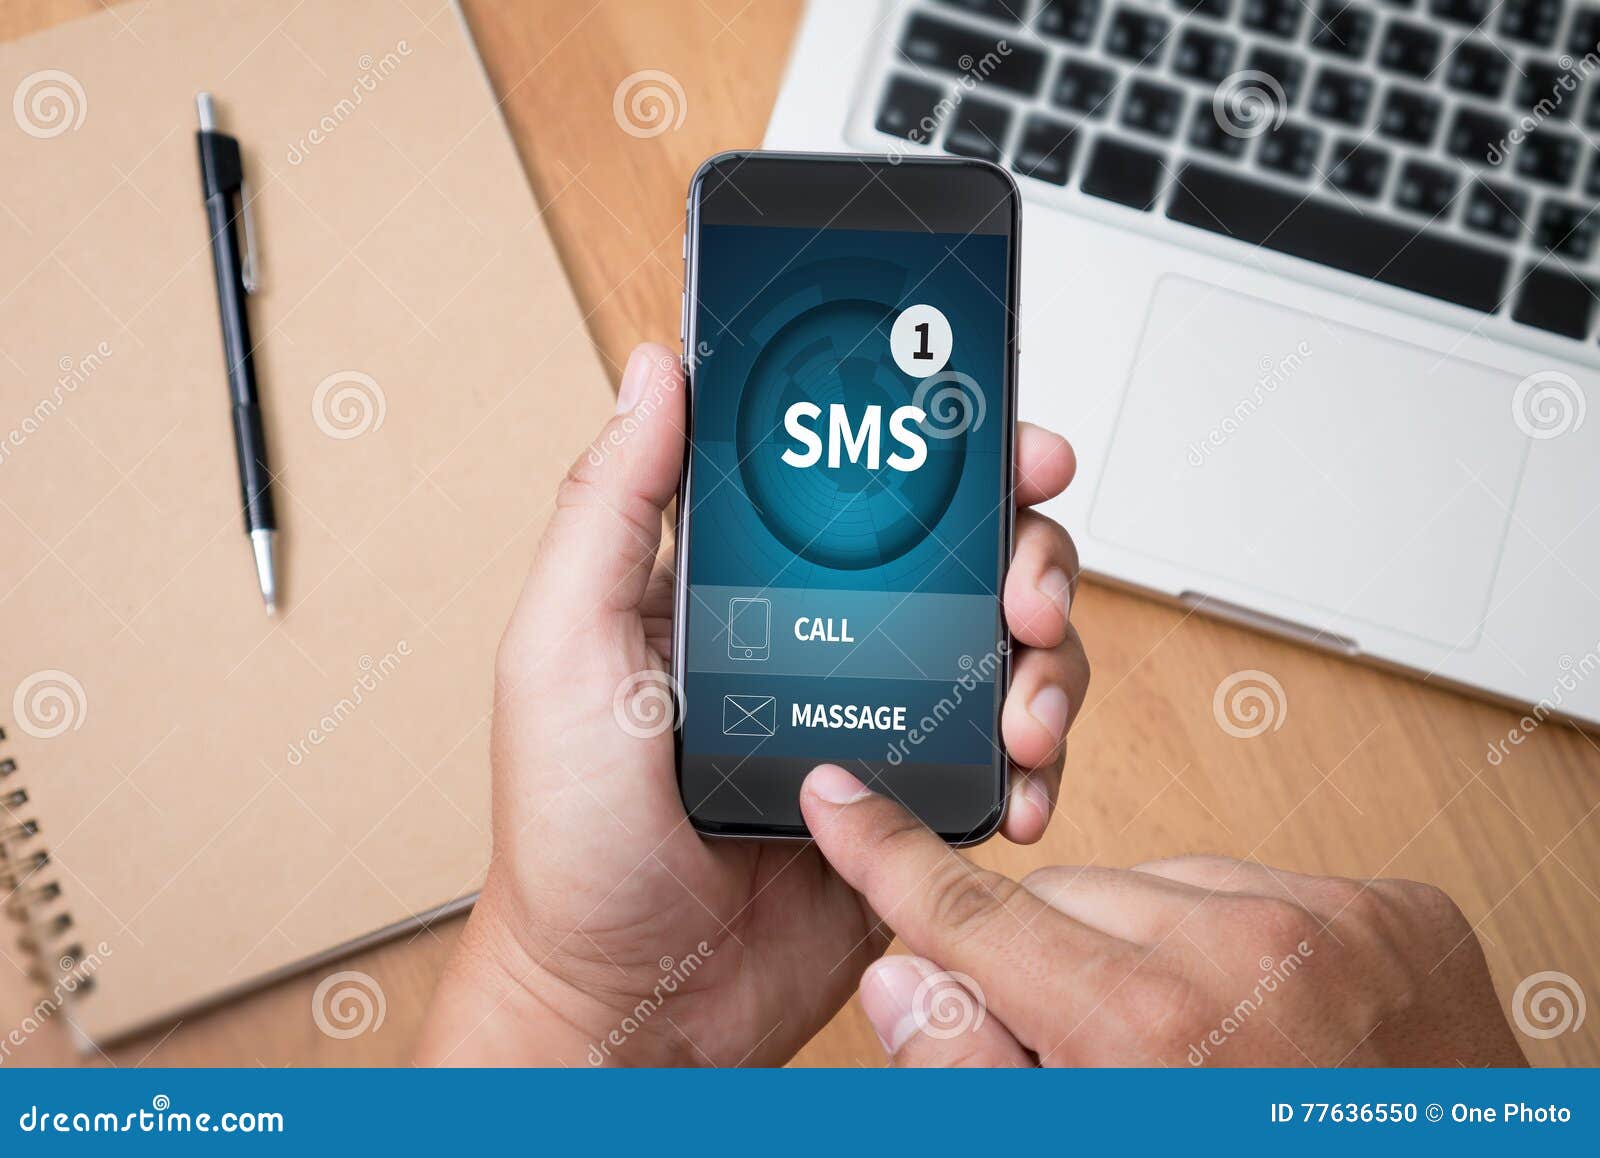 sms messaging communication notification alert reminder sms